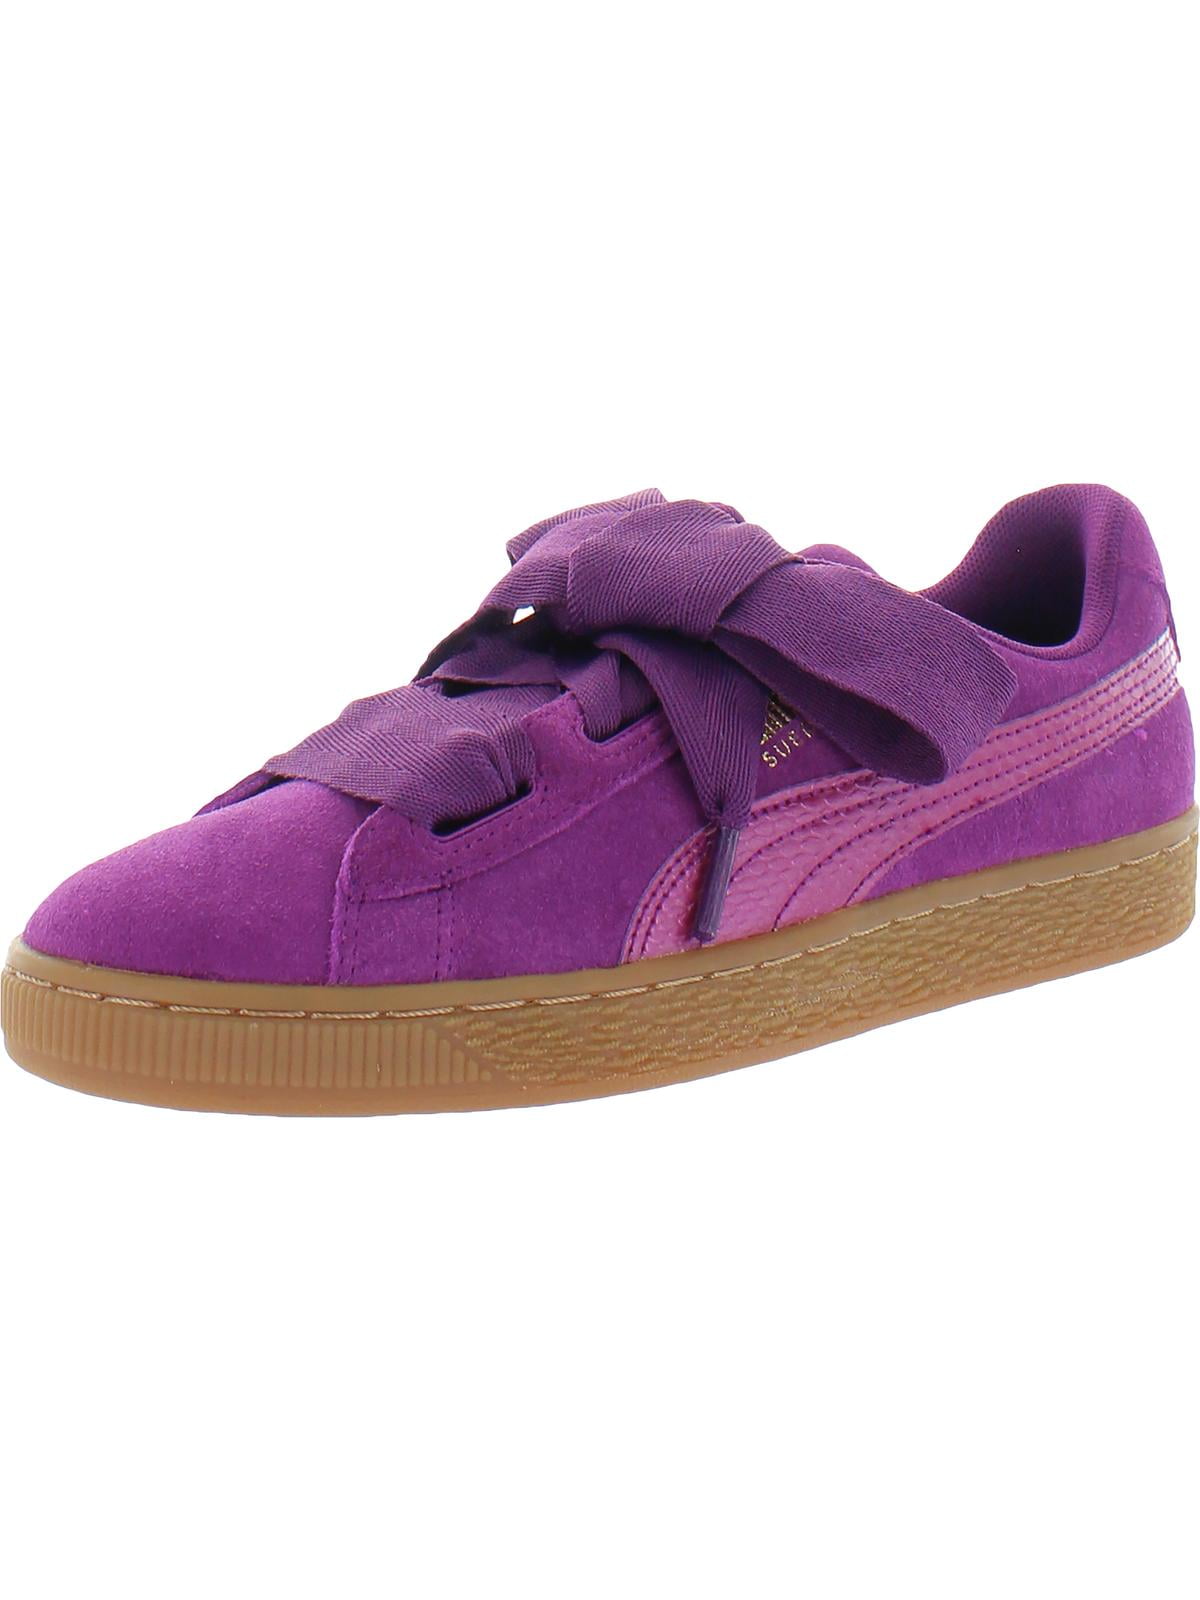 Puma Girls' Sneakers Dark - Dark Purple Heart Suede Sneaker - Girls